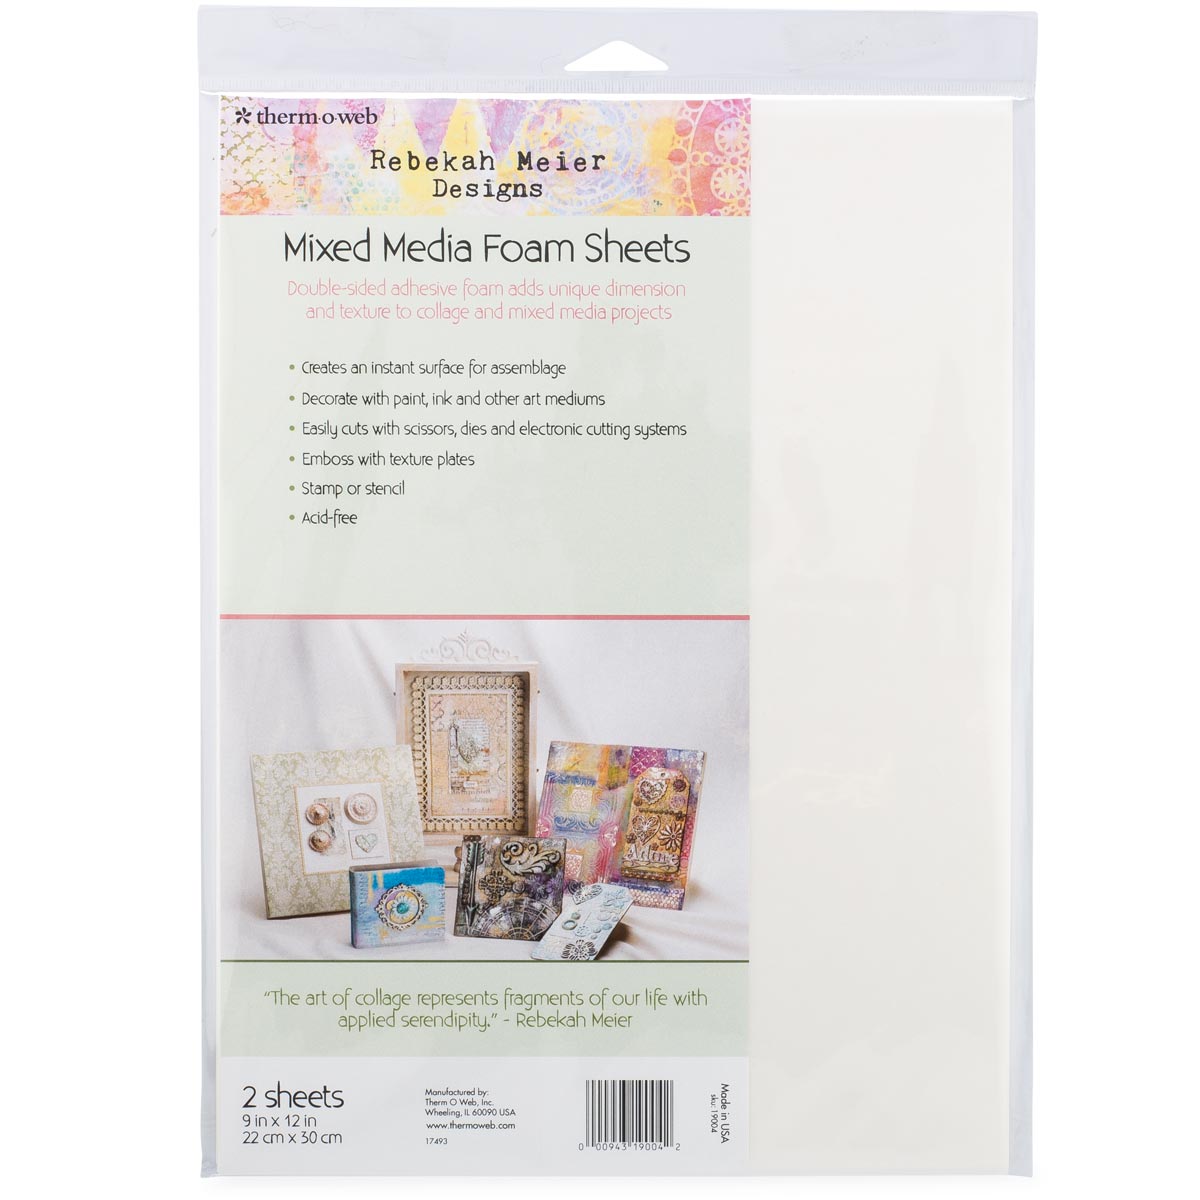 Rebekah Meier Wholesale - Mixed Media Foam Sheets. 9 x 12 inches x 2 sheets 